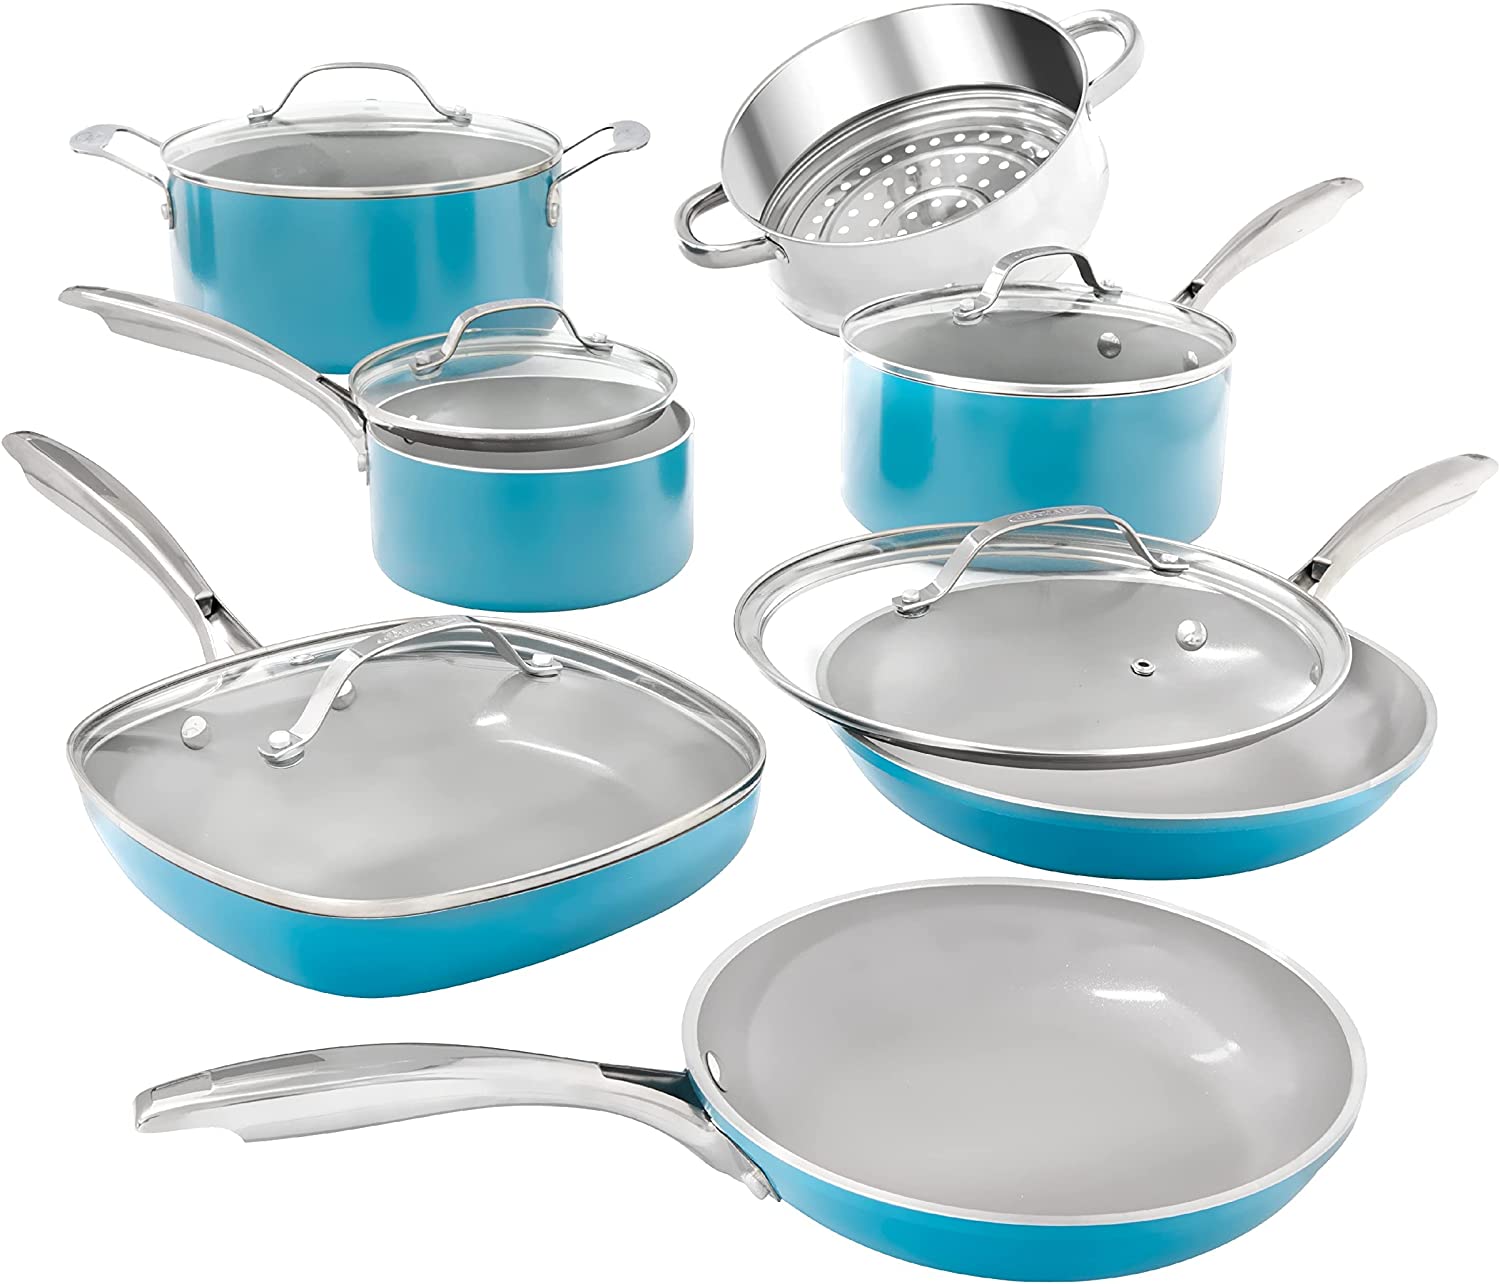 https://bigbigmart.com/wp-content/uploads/2023/06/Gotham-Steel-Aqua-Blue-Pots-and-Pans-Set-12-Piece-Nonstick-Ceramic-Cookware-Set-Includes-Frying-Pans-Stockpots-Saucepans-Stay-Cool-Handles-Oven-Dishwasher-Safe-100-PFOA-Free-Turquoise.jpg